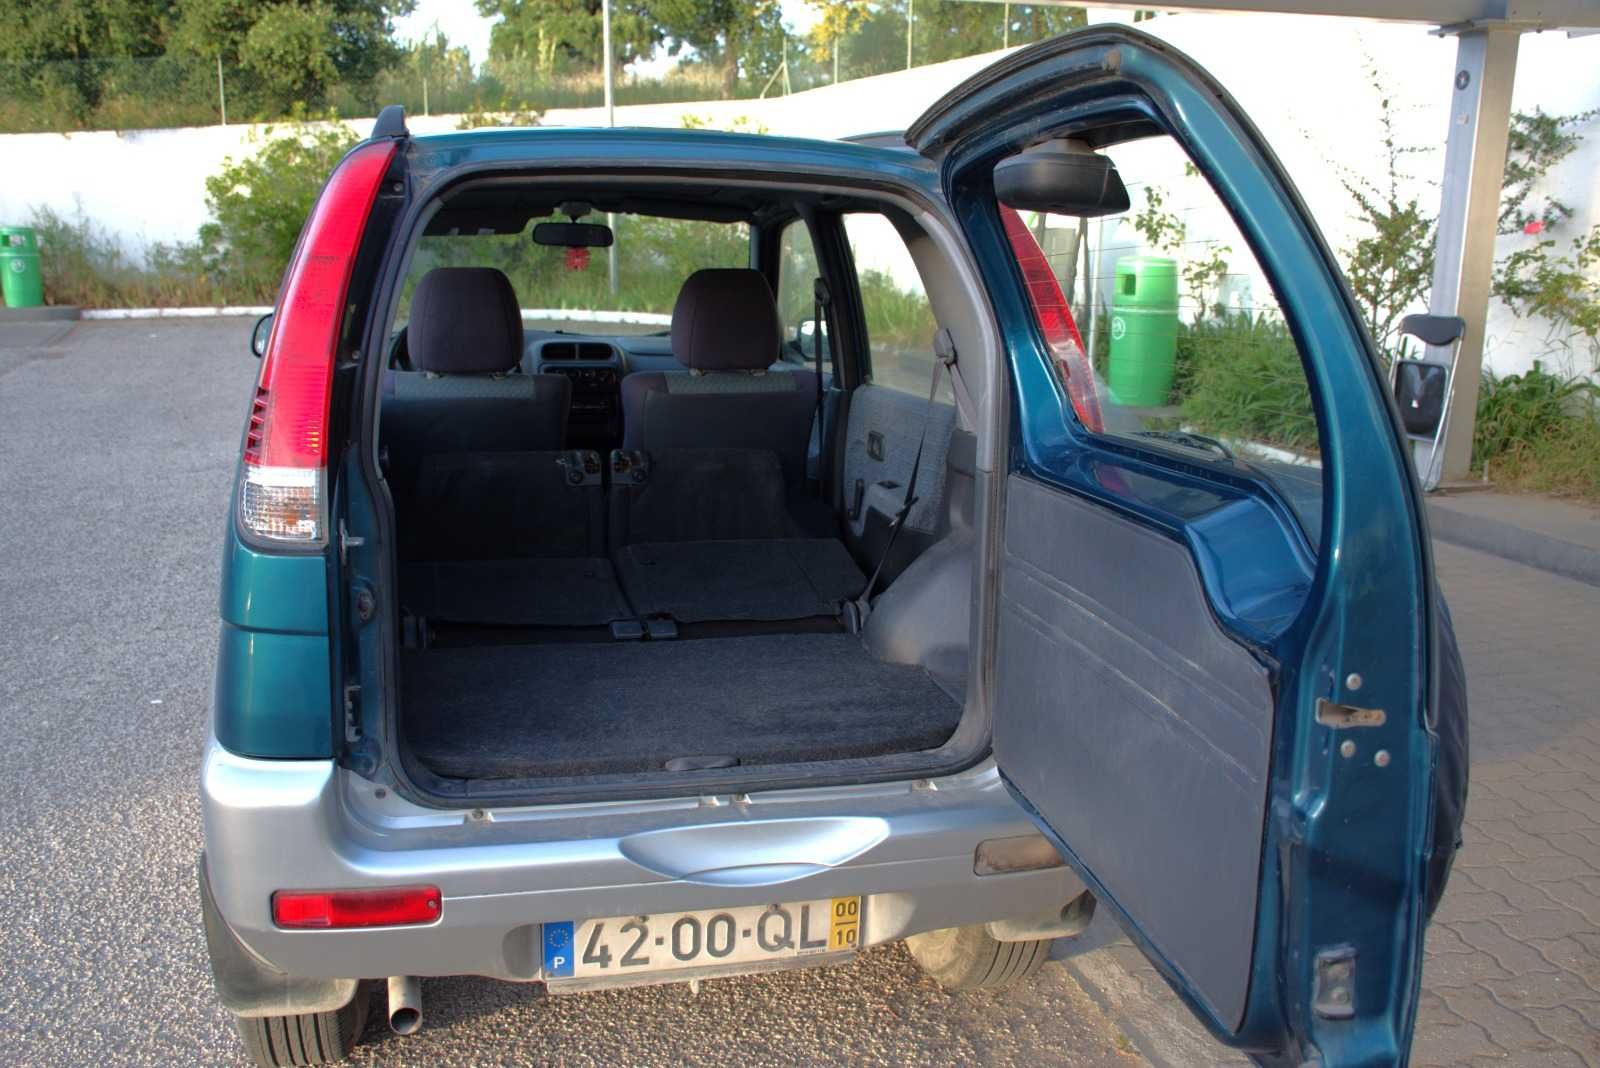 Daihatsu Terios 2000 (4x4) - 2500€ (Negociável)